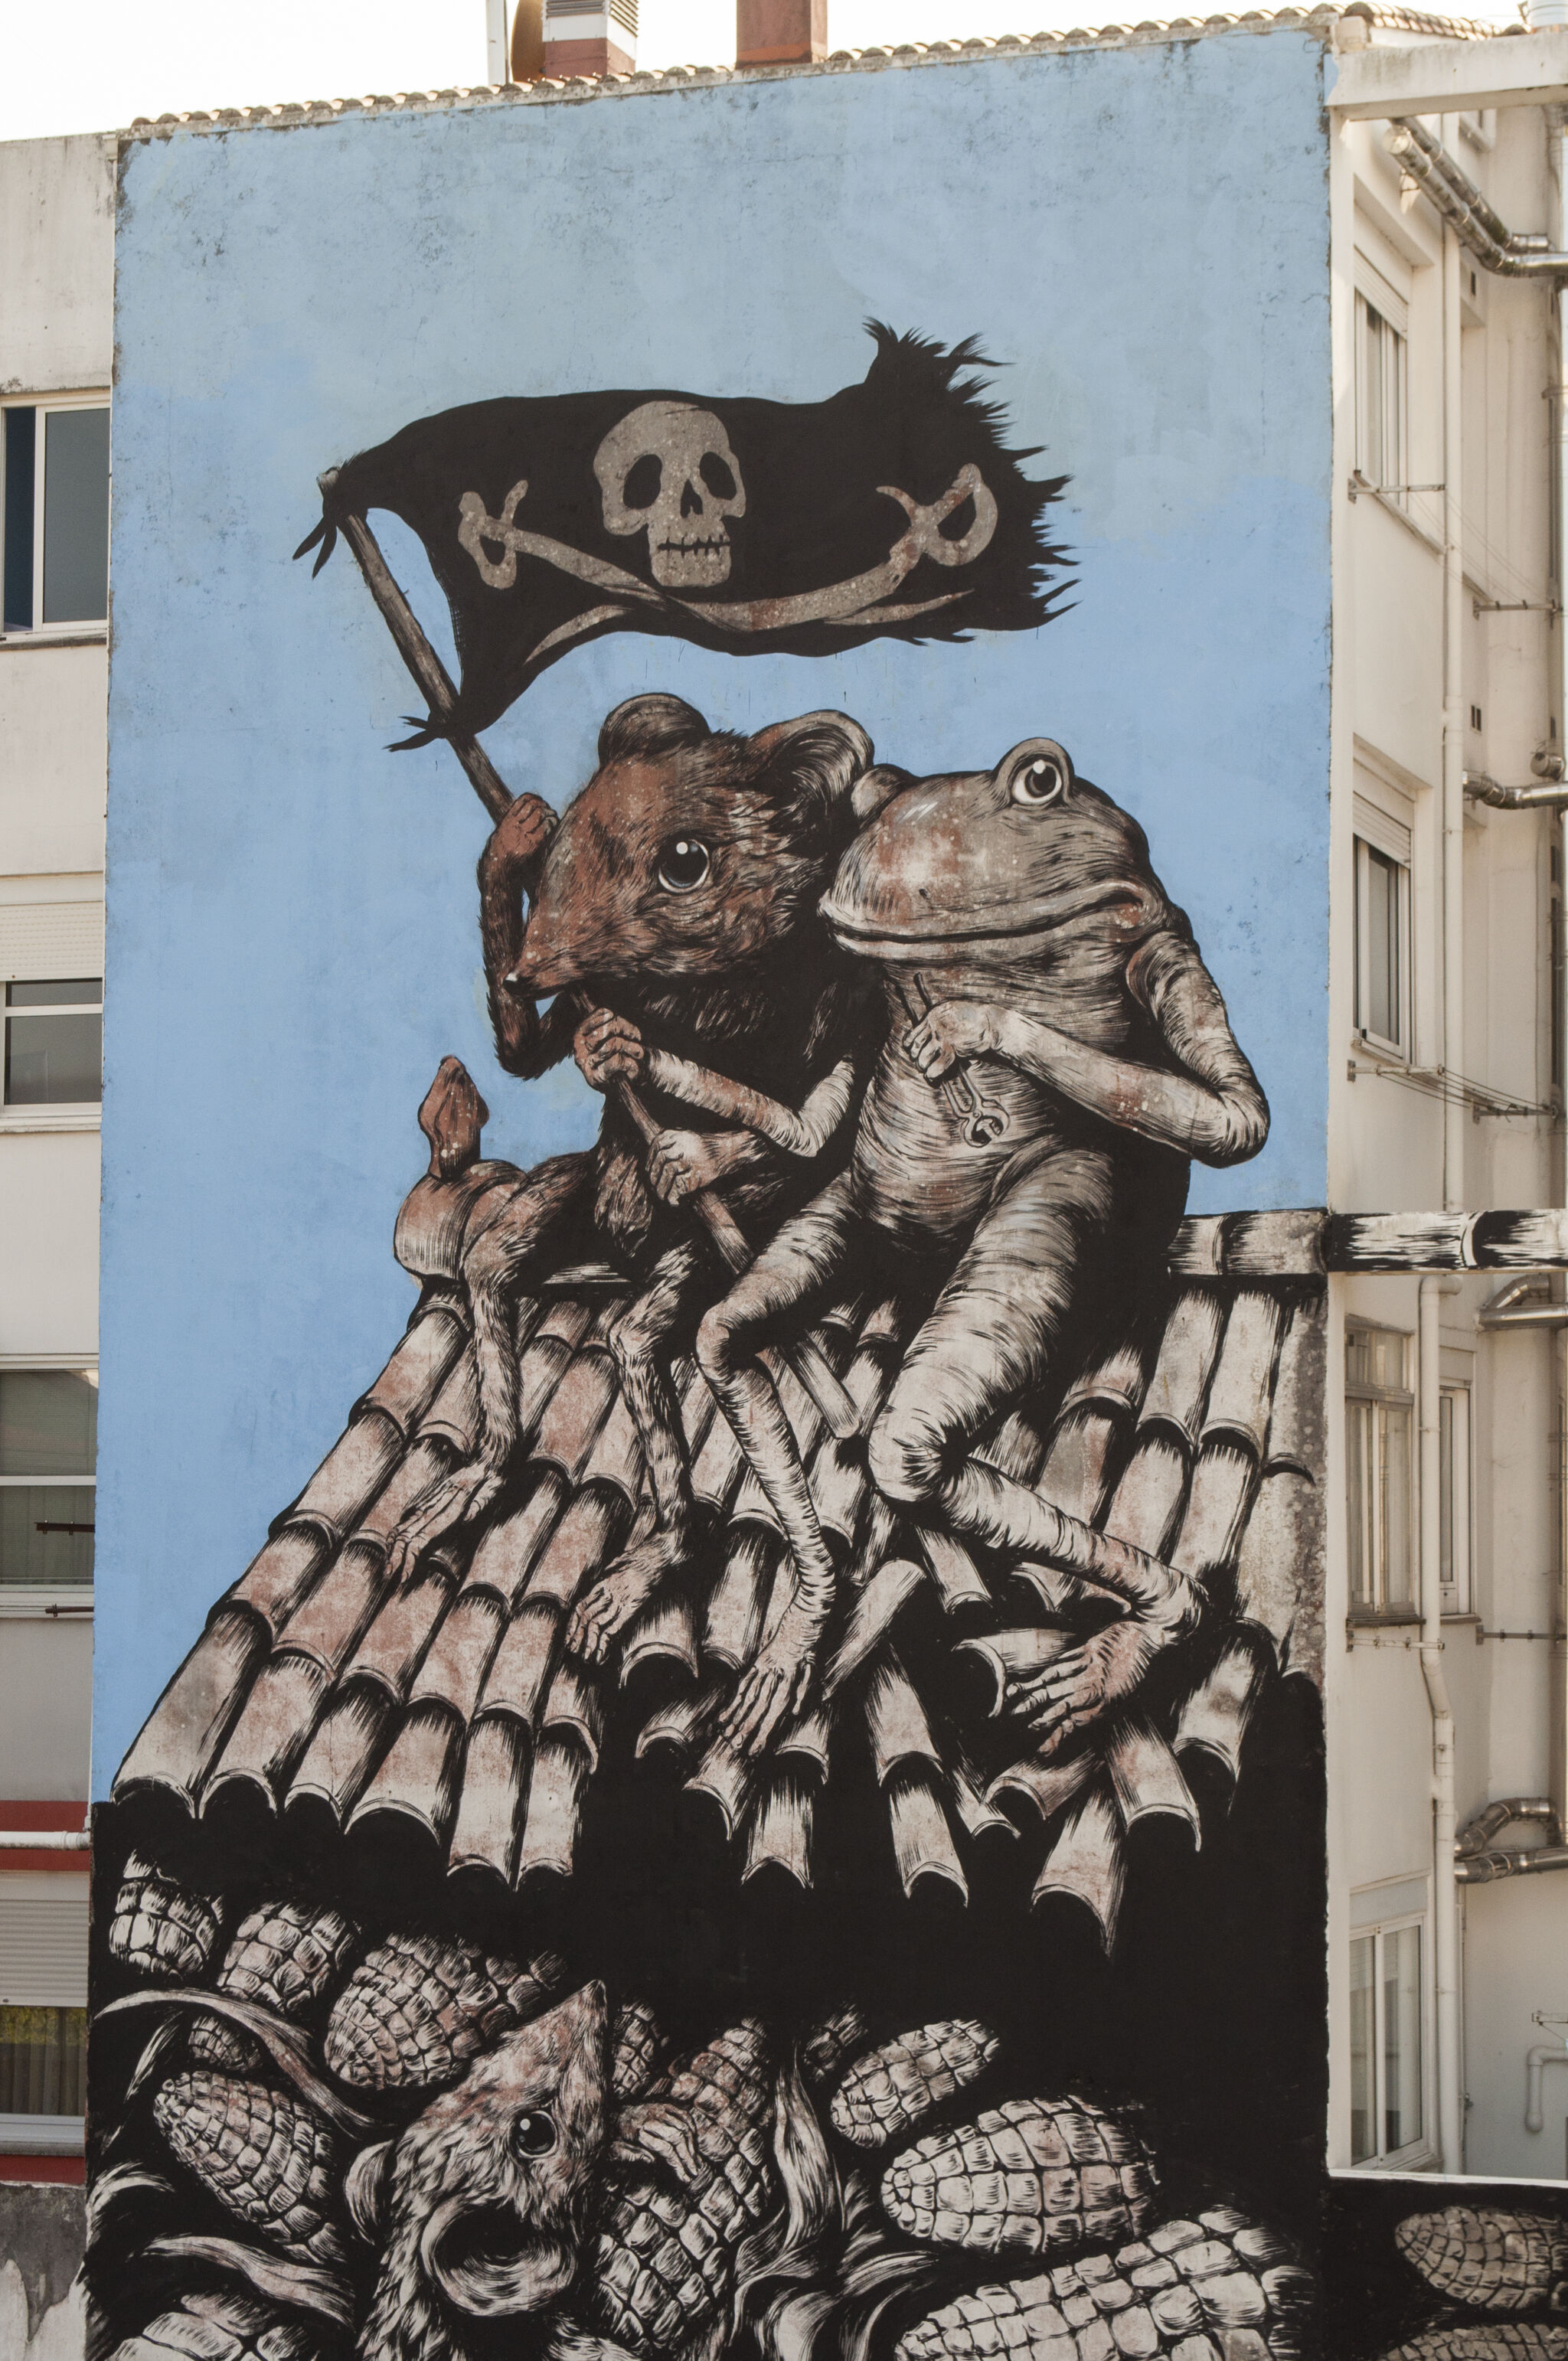 Erica Il cane&mdash;Wall by ERICA IL CANE for DESORDES CREATIVAS 2017 in Ordes (Galicia-Spain)